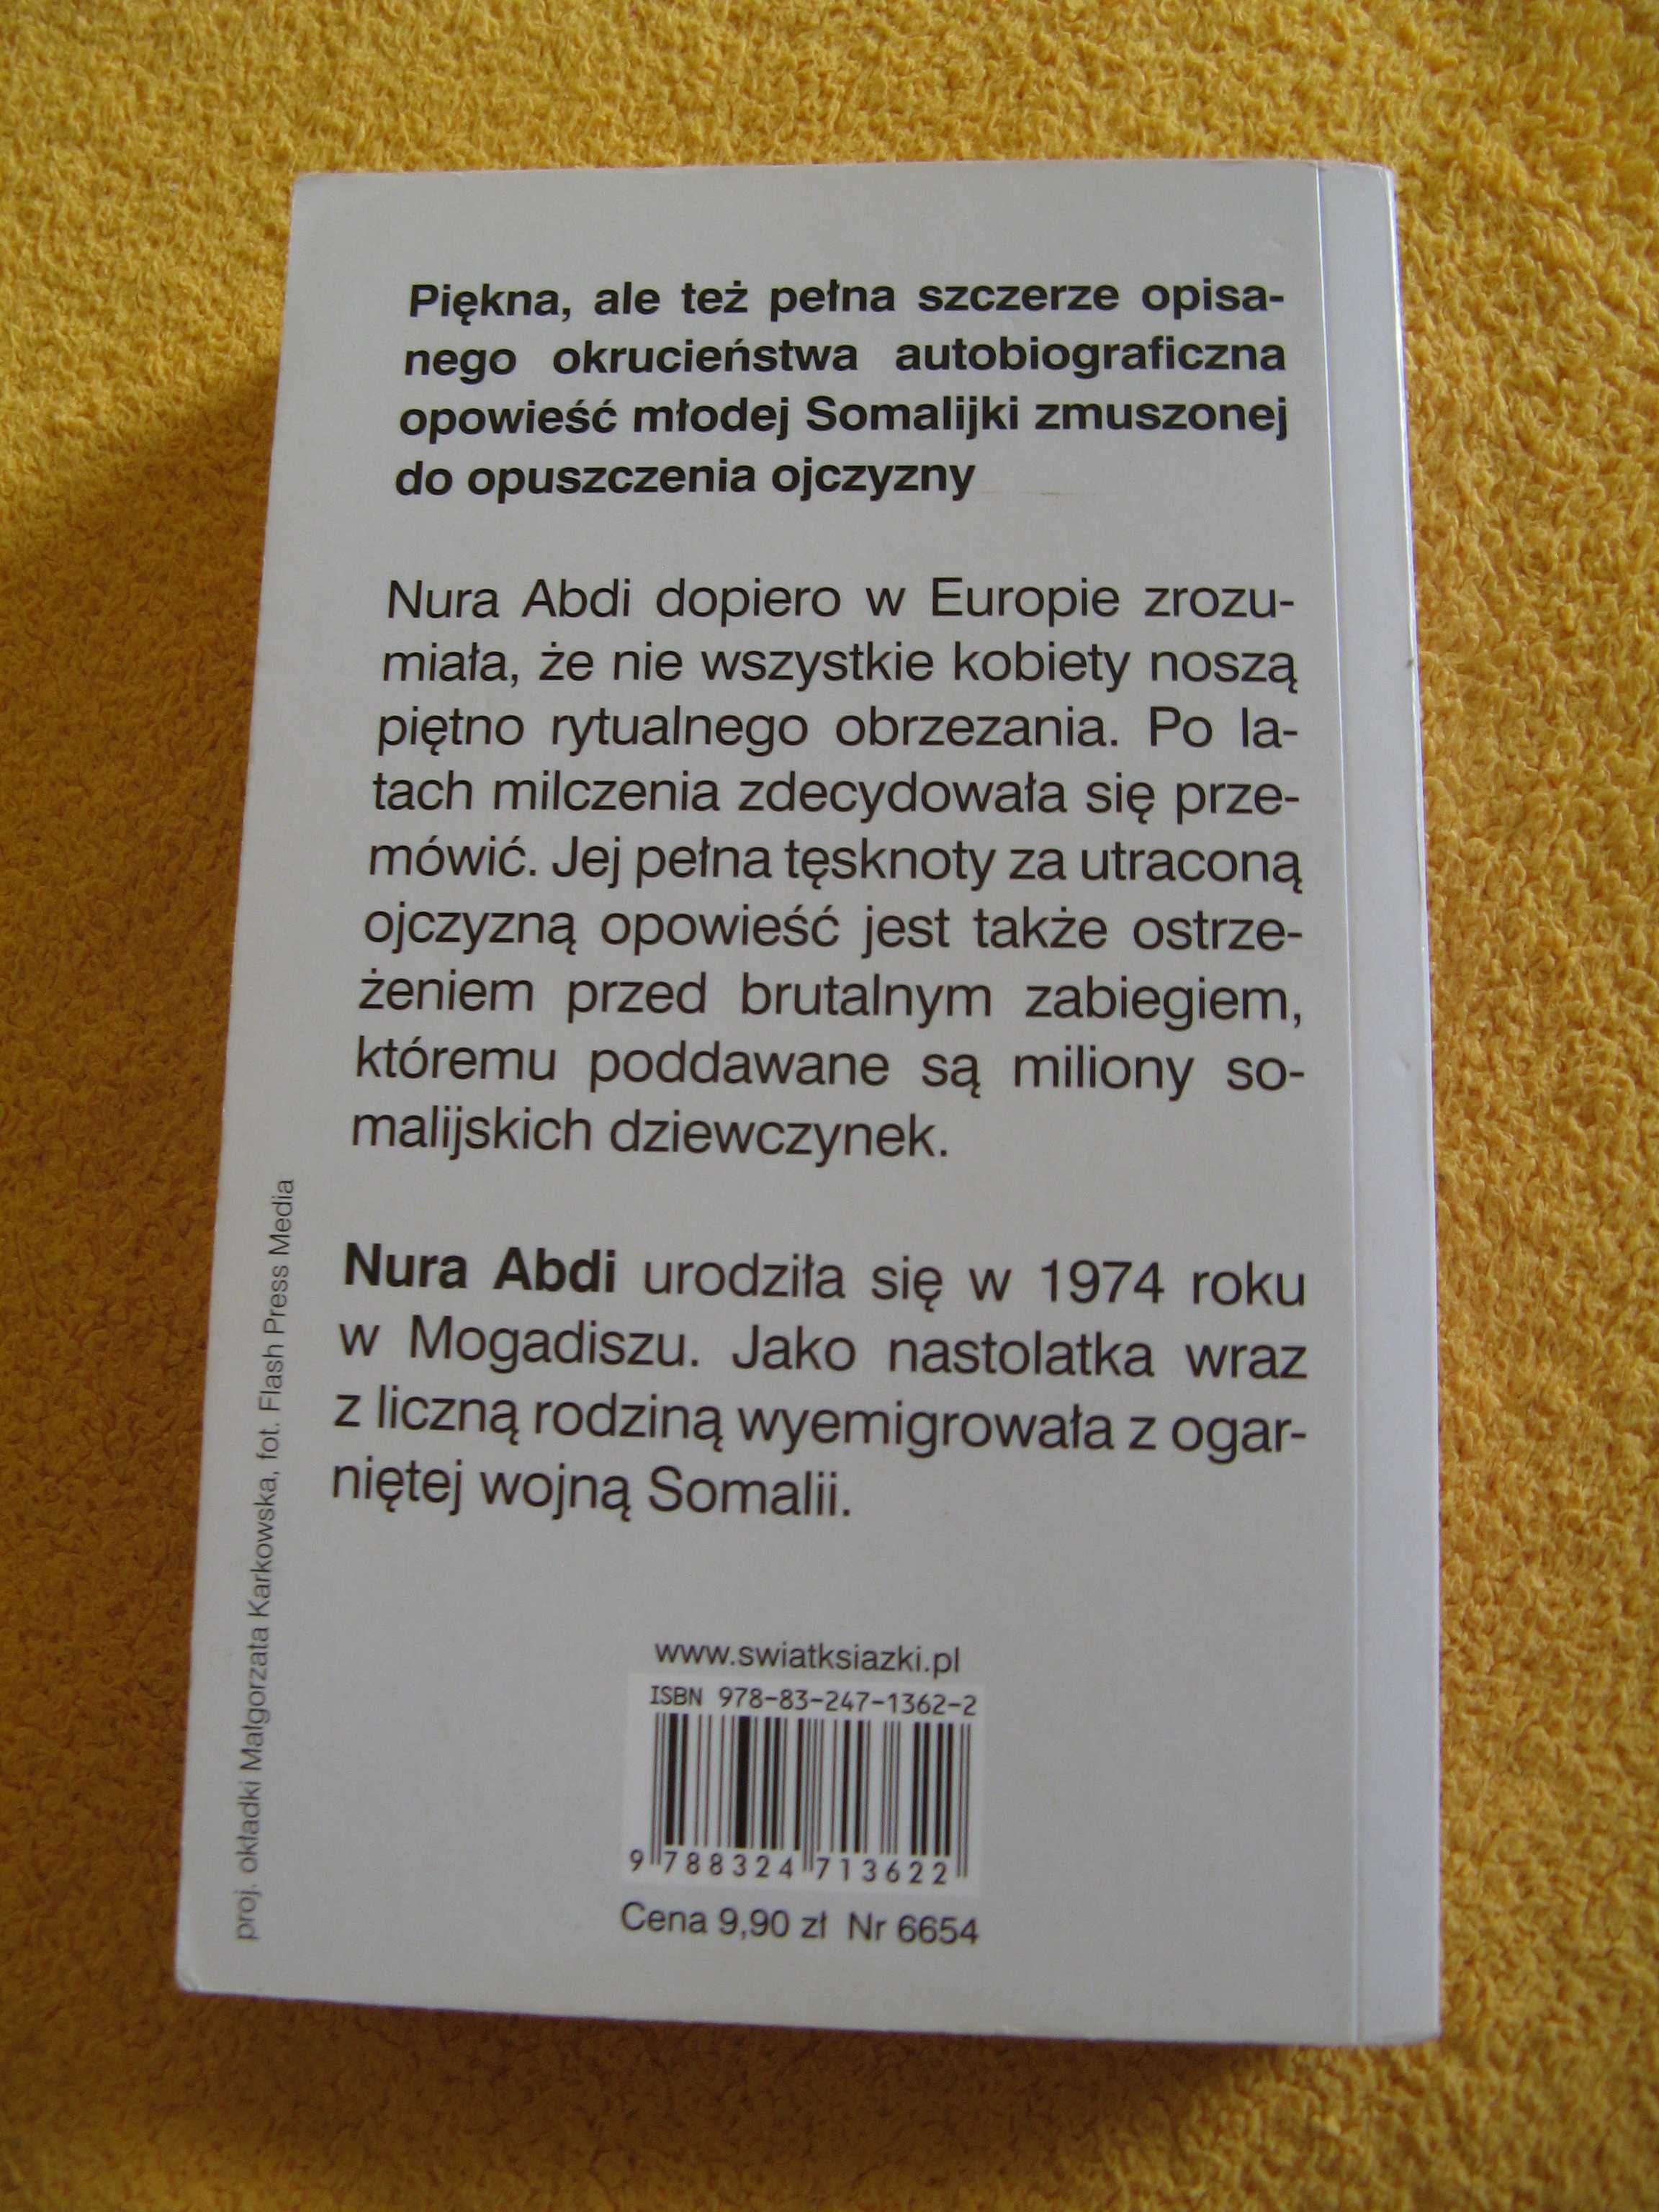 Książka Łzy na piasku, Leo G. Linder, Nura Abdi